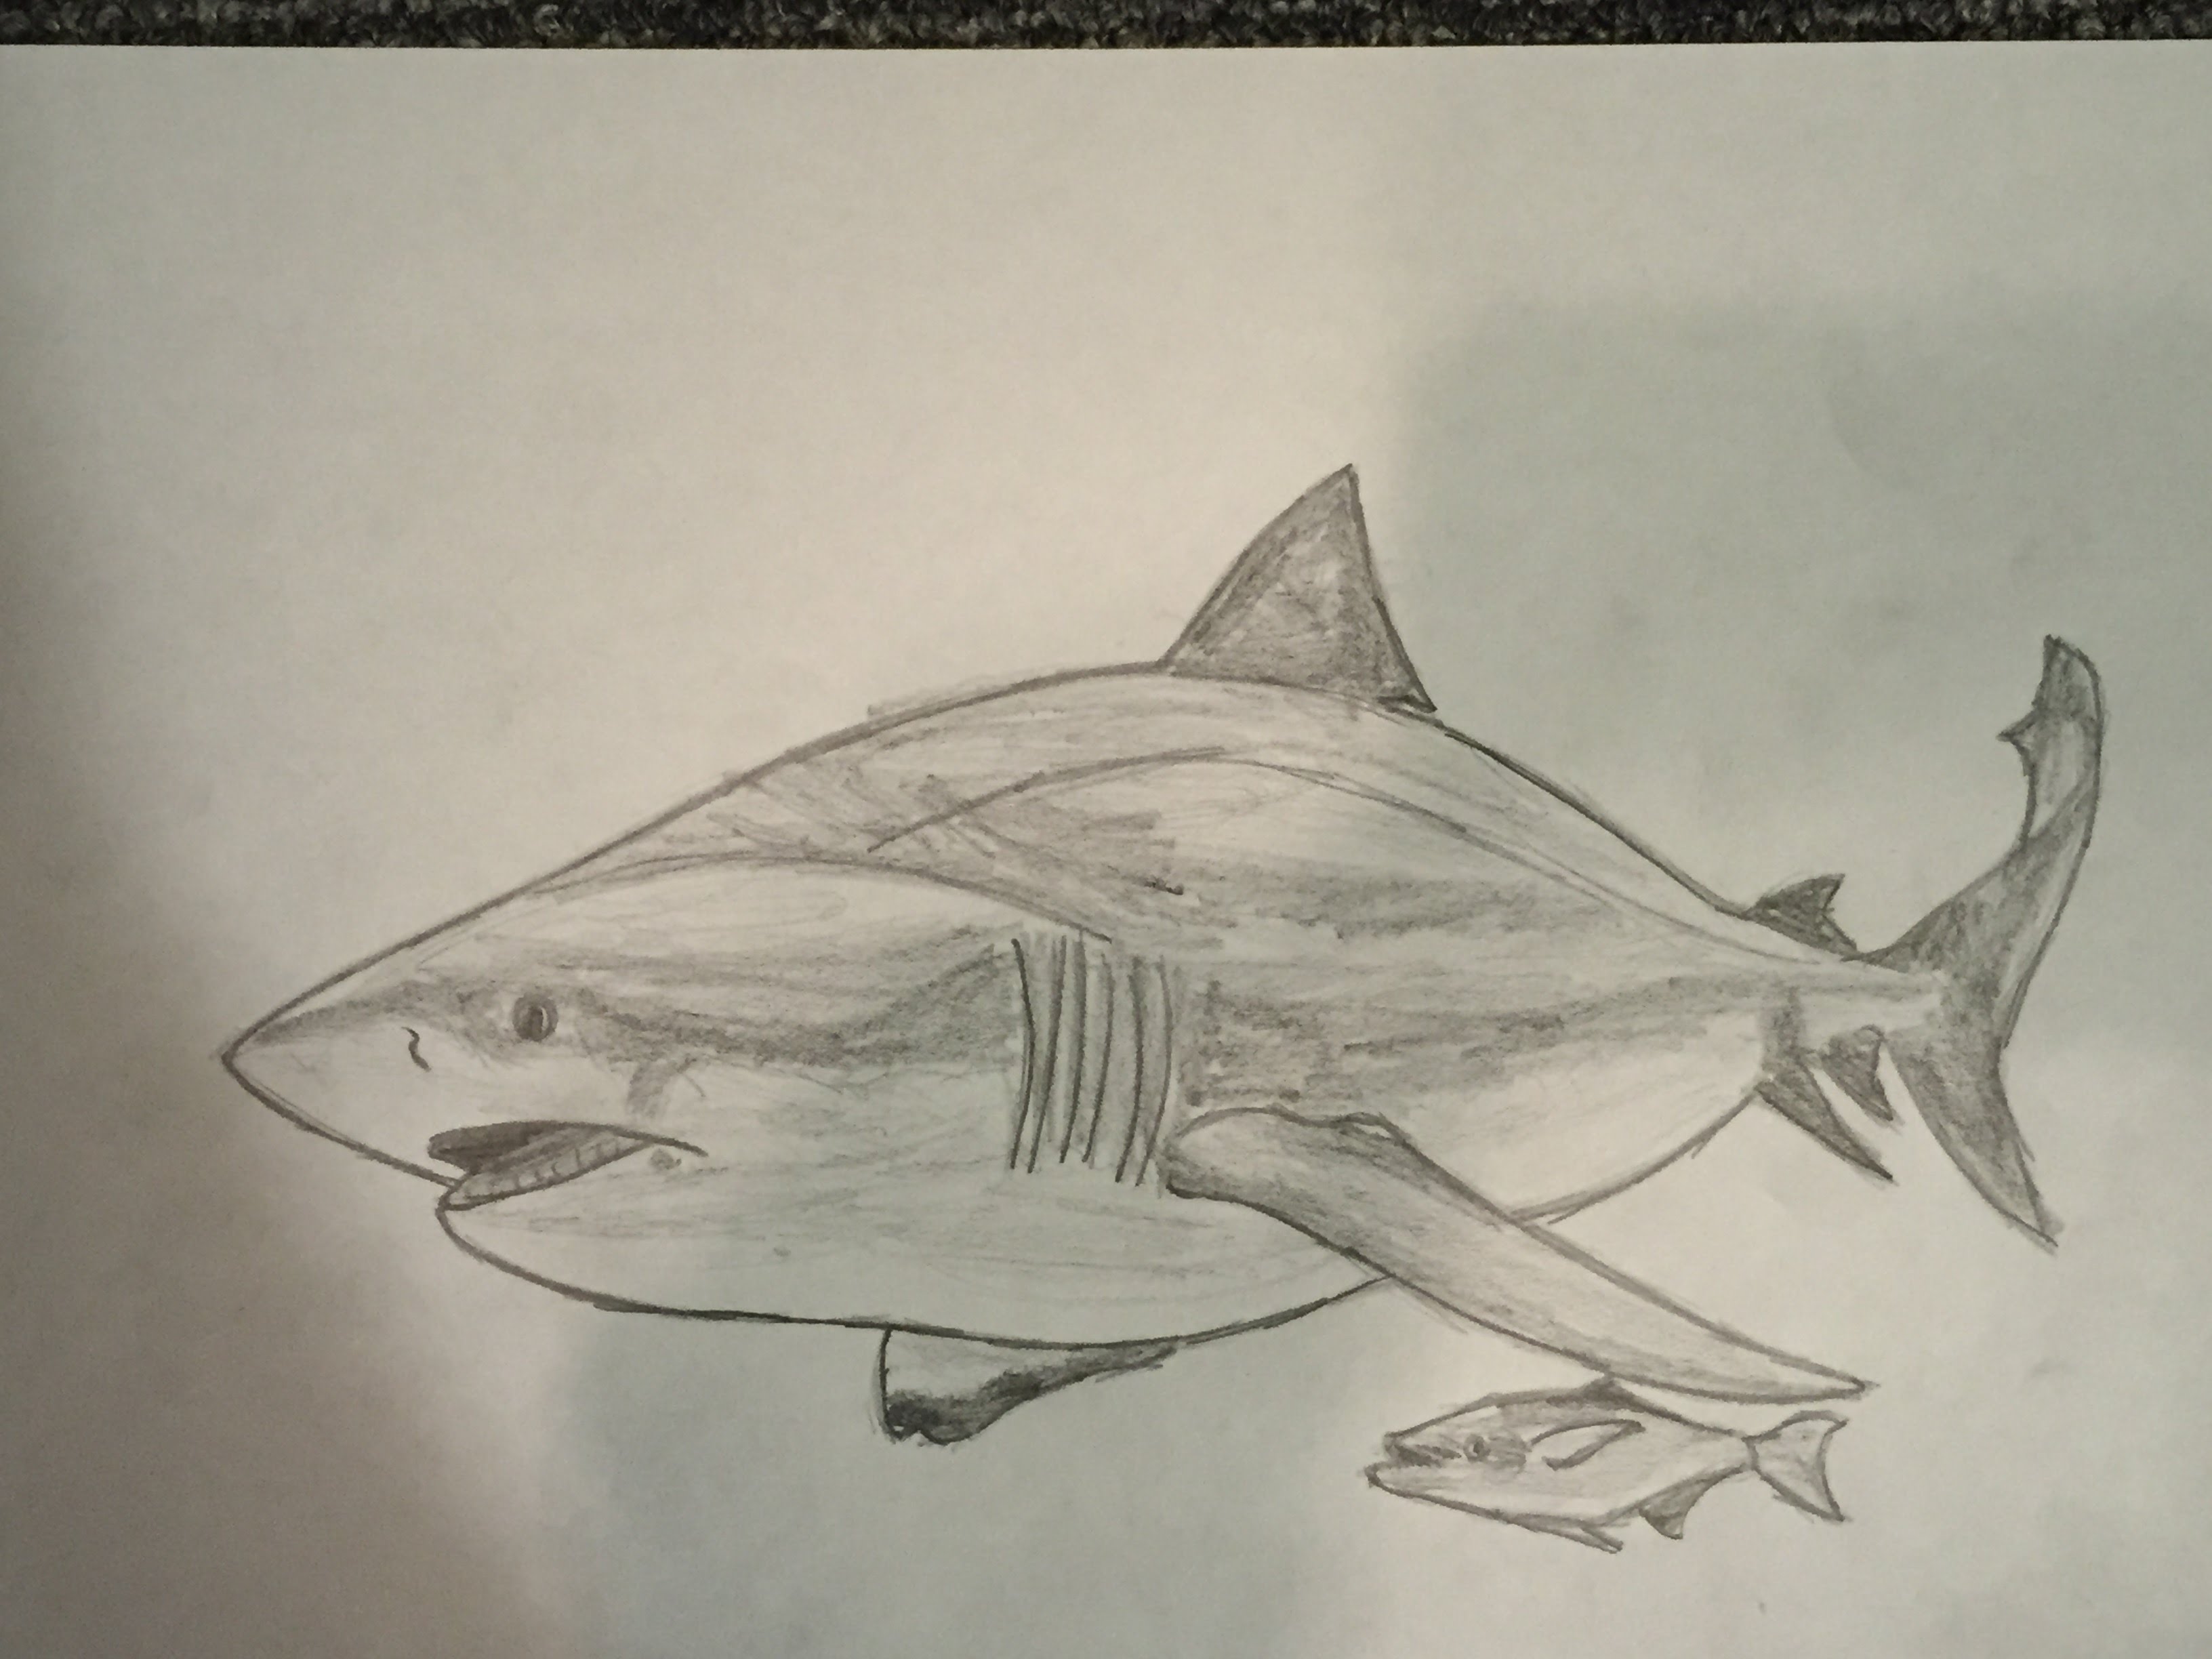 3264x2448 How To Draw A Bull Shark.